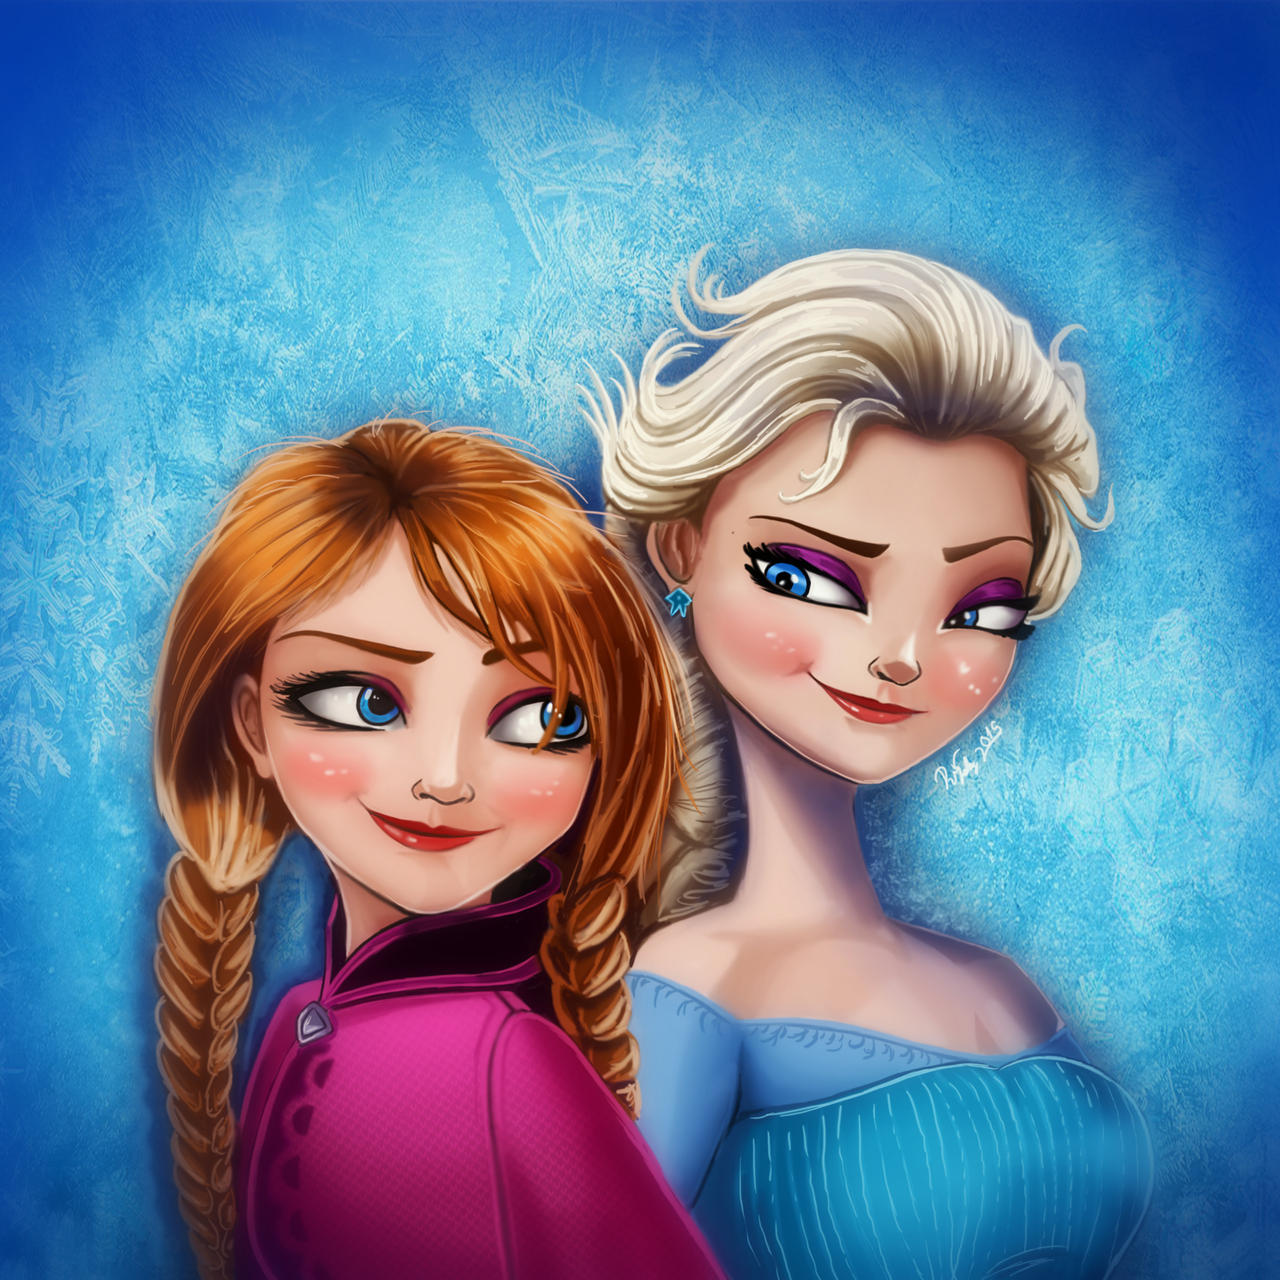 Elsa and Anna by SASHlMlSAN on DeviantArt